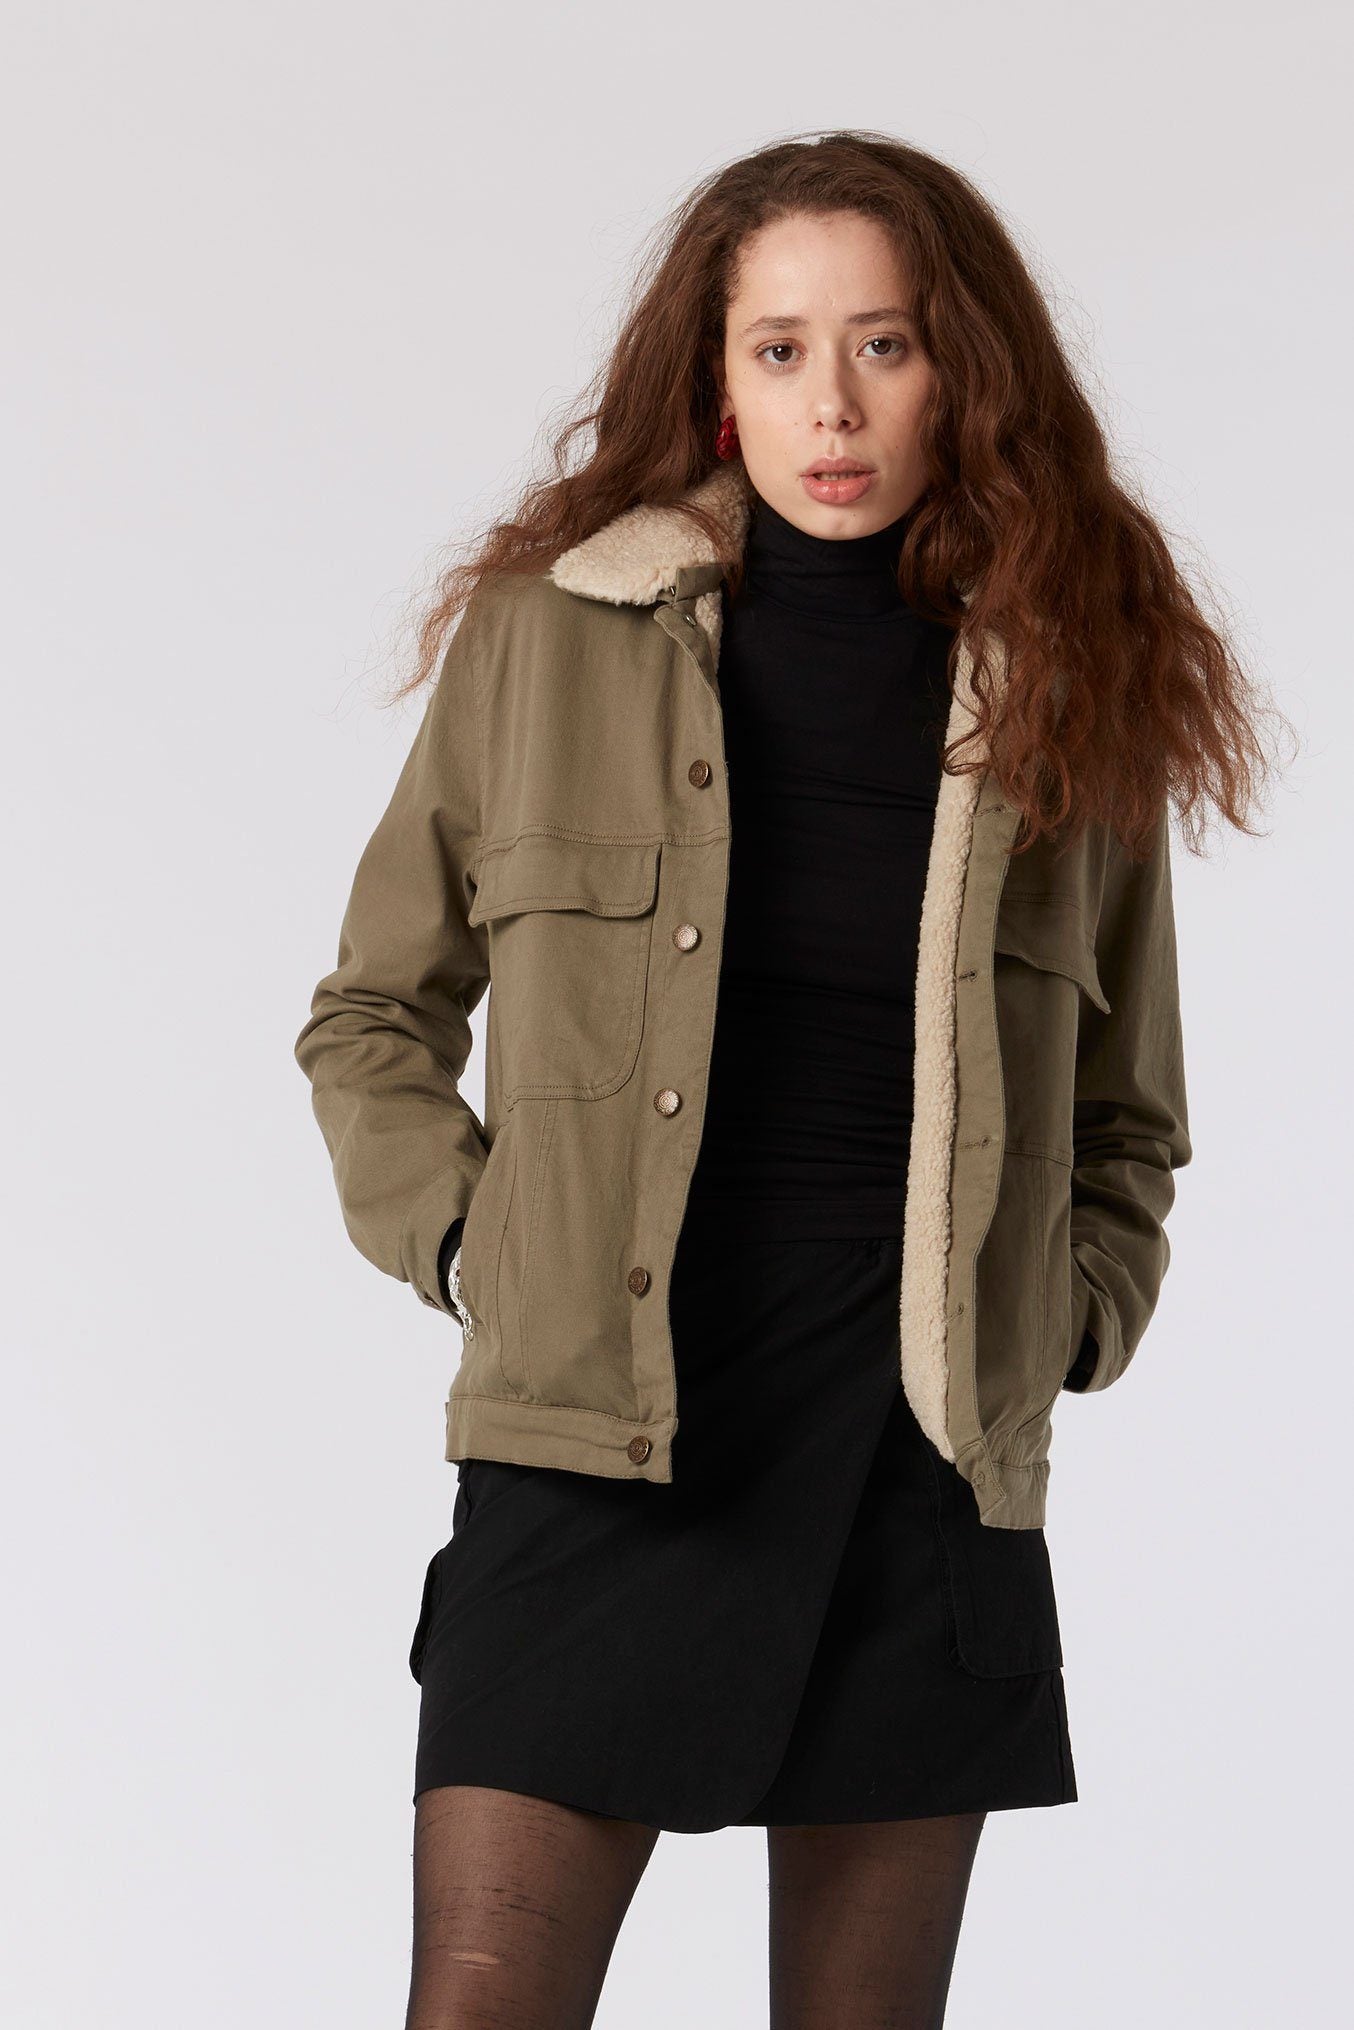 EVER - Fleece Lined Organic Cotton Jacket Slate, Size 4 / Uk 14 / Eur 42